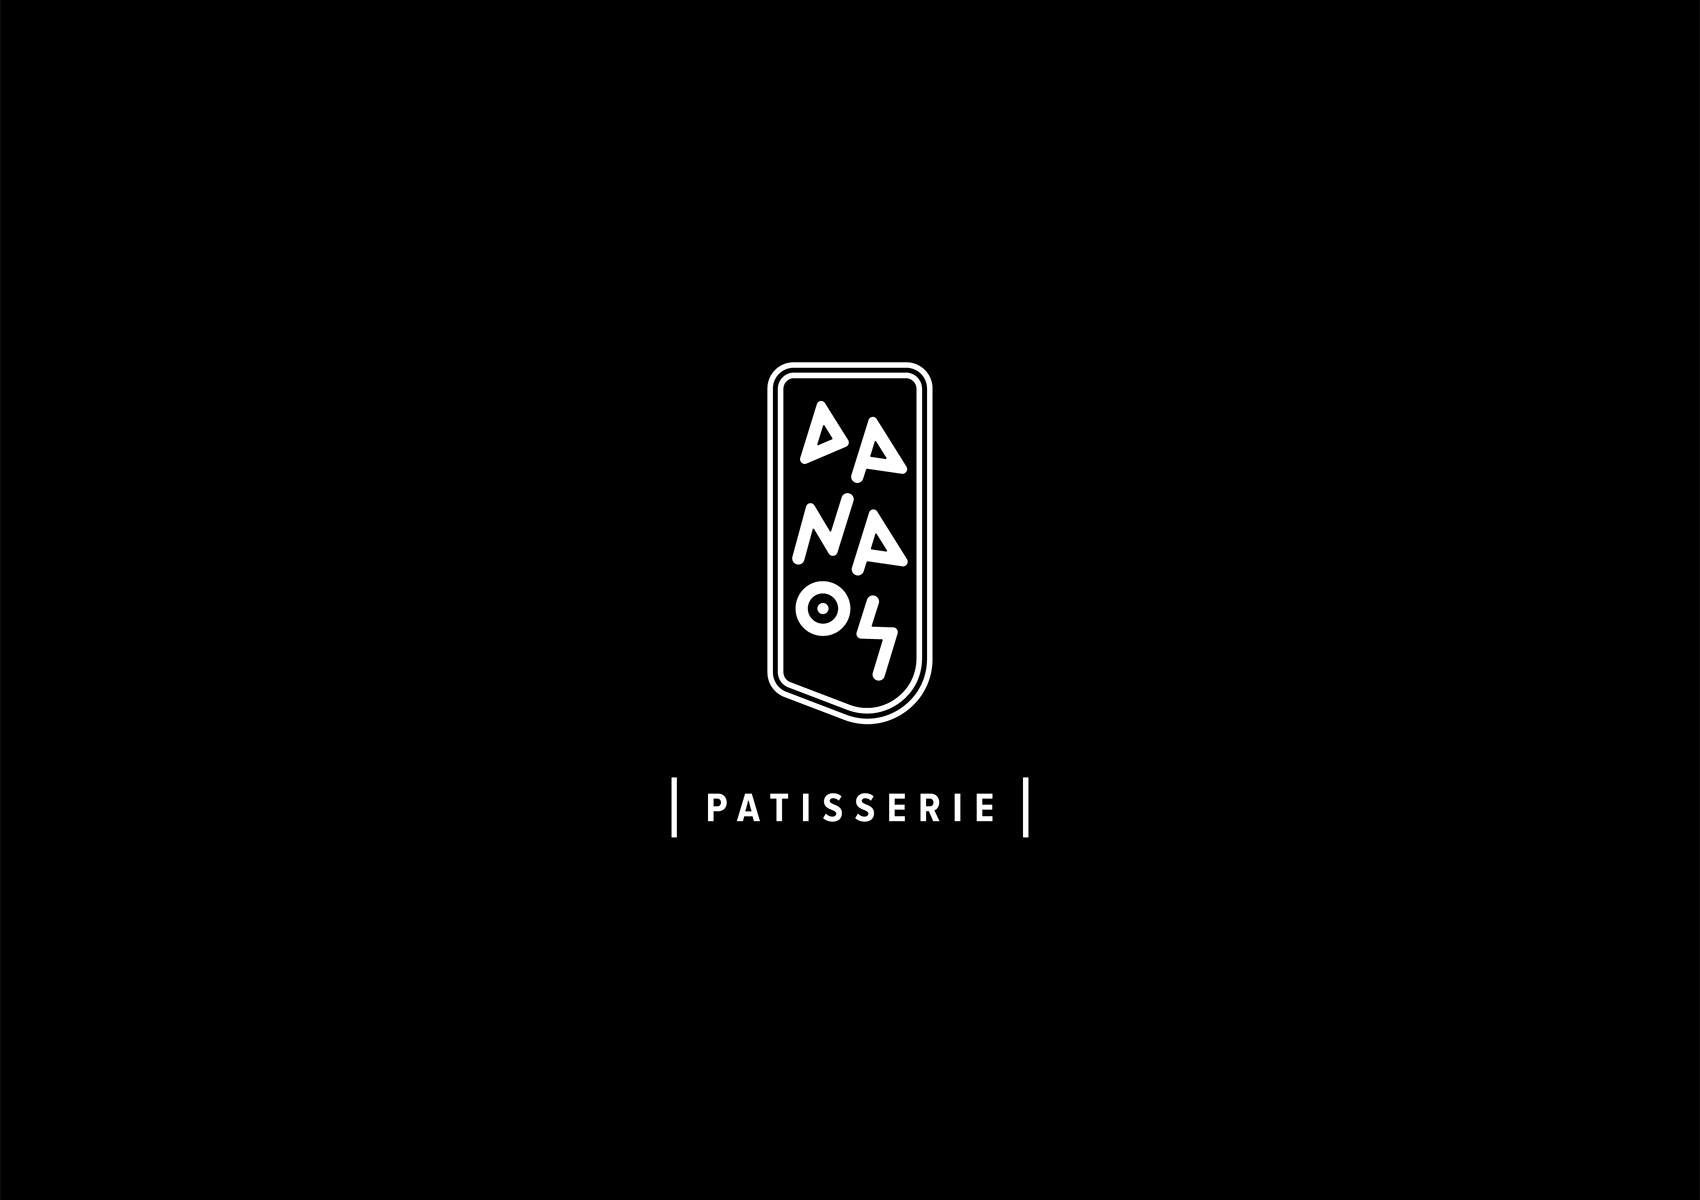 Danaos Patisserie BlackWhite logo 1700x1200 by xhristakis